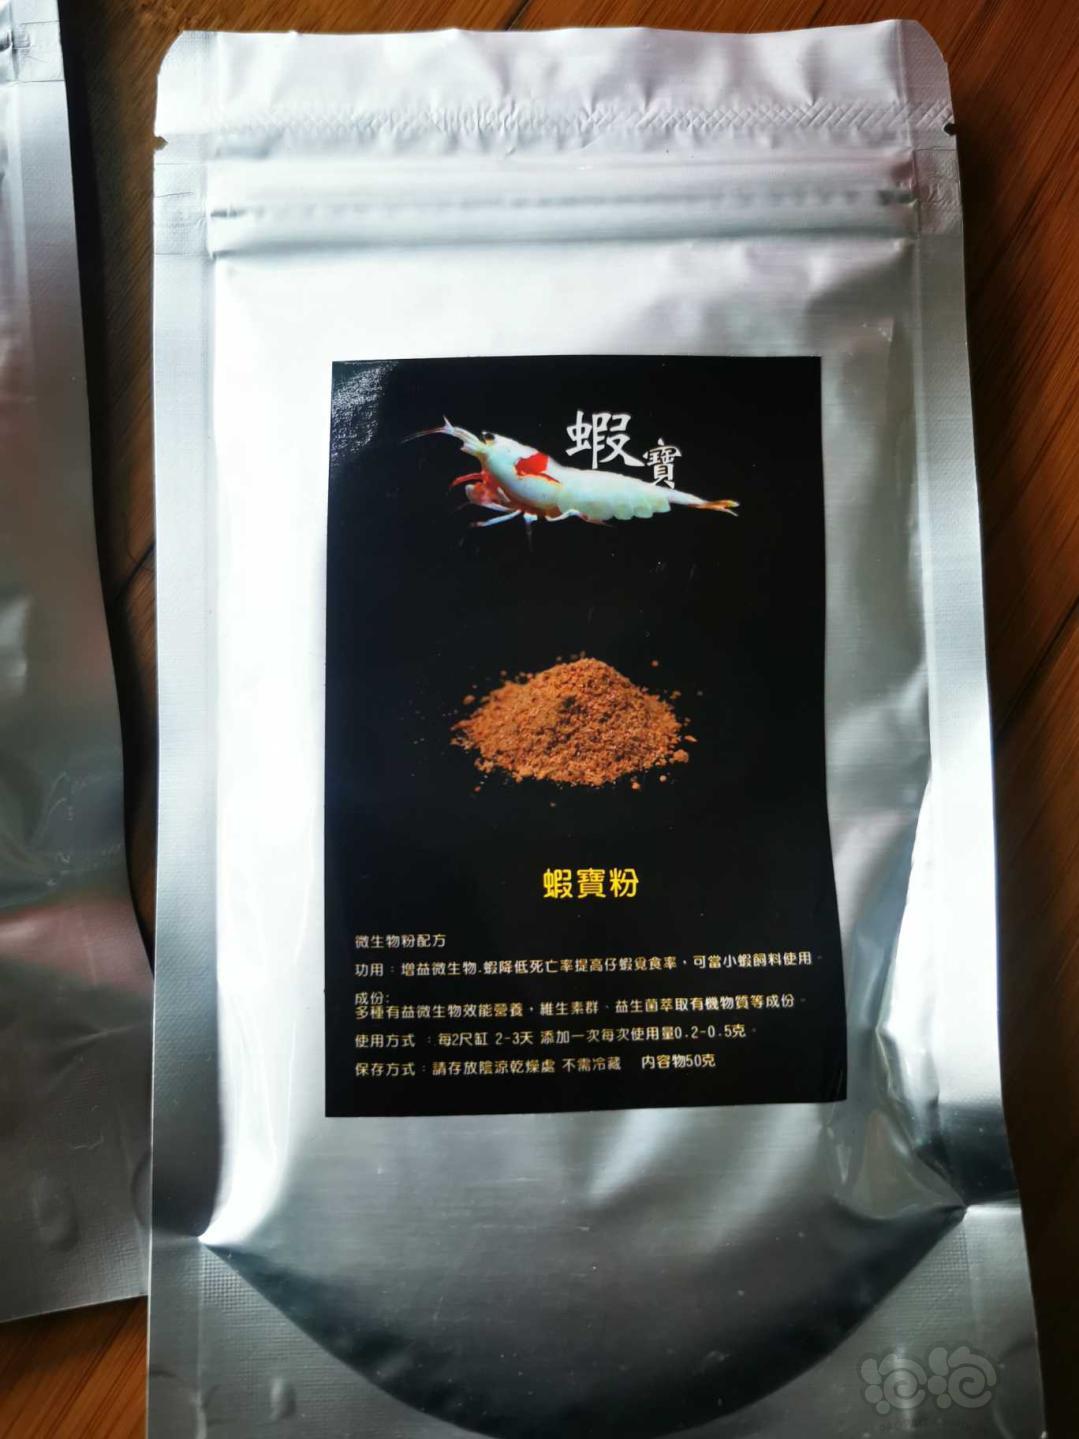 2021-1-23#RMB拍卖台湾森林虾宝粉一袋50克-图1